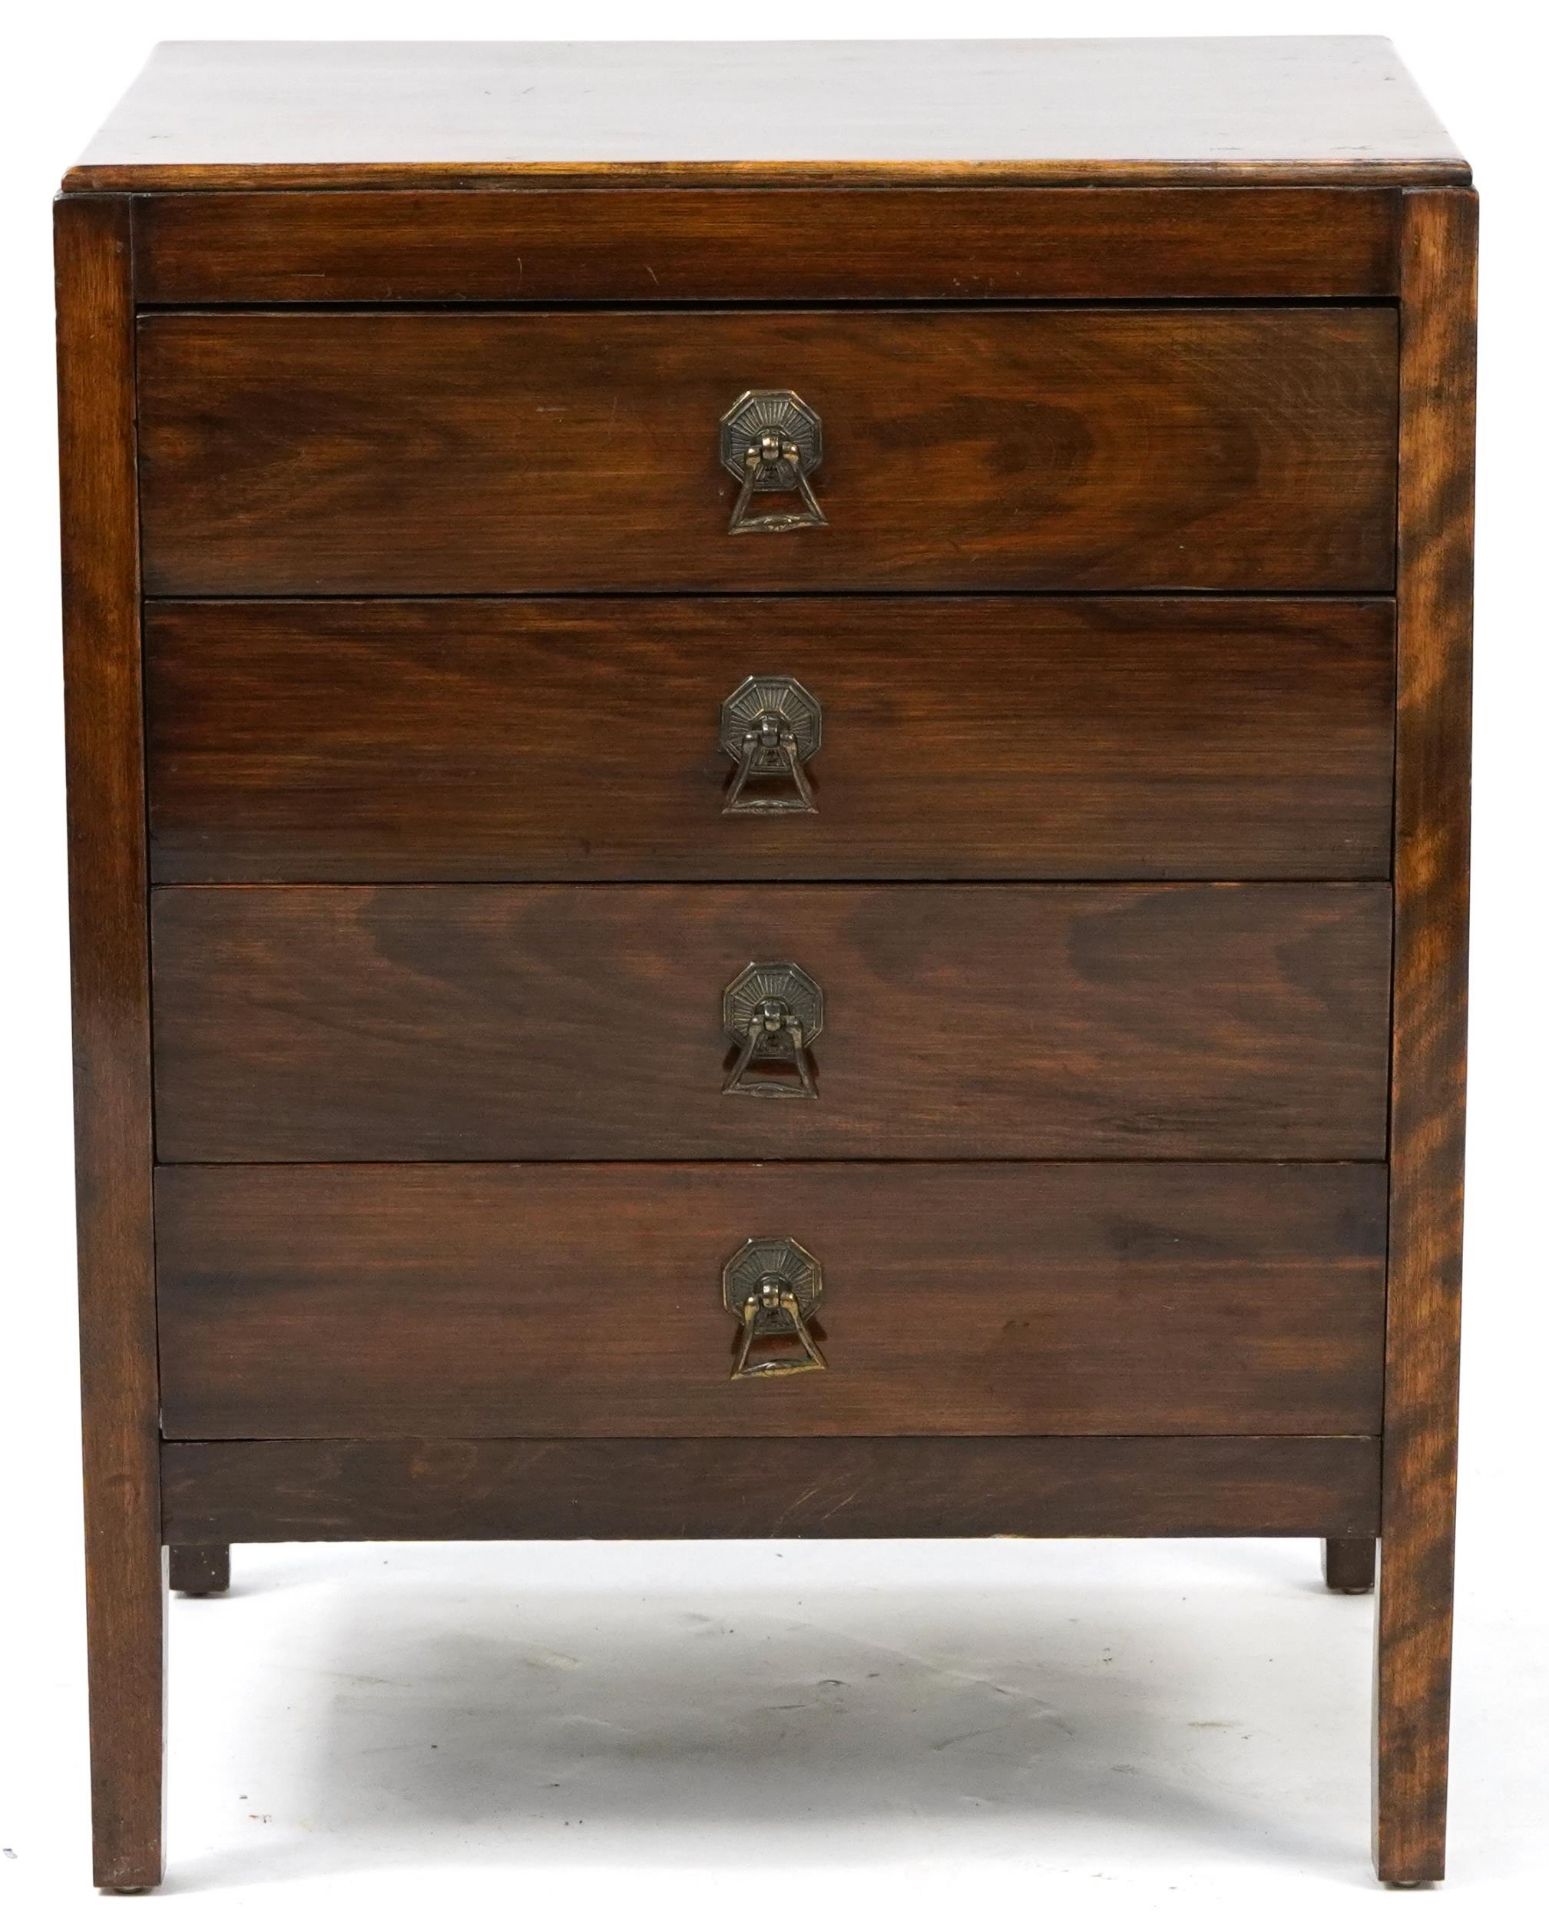 Art Deco oak four drawer record cabinet with drop down fronts, 62cm H x 49cm W x 38cm D - Image 2 of 3